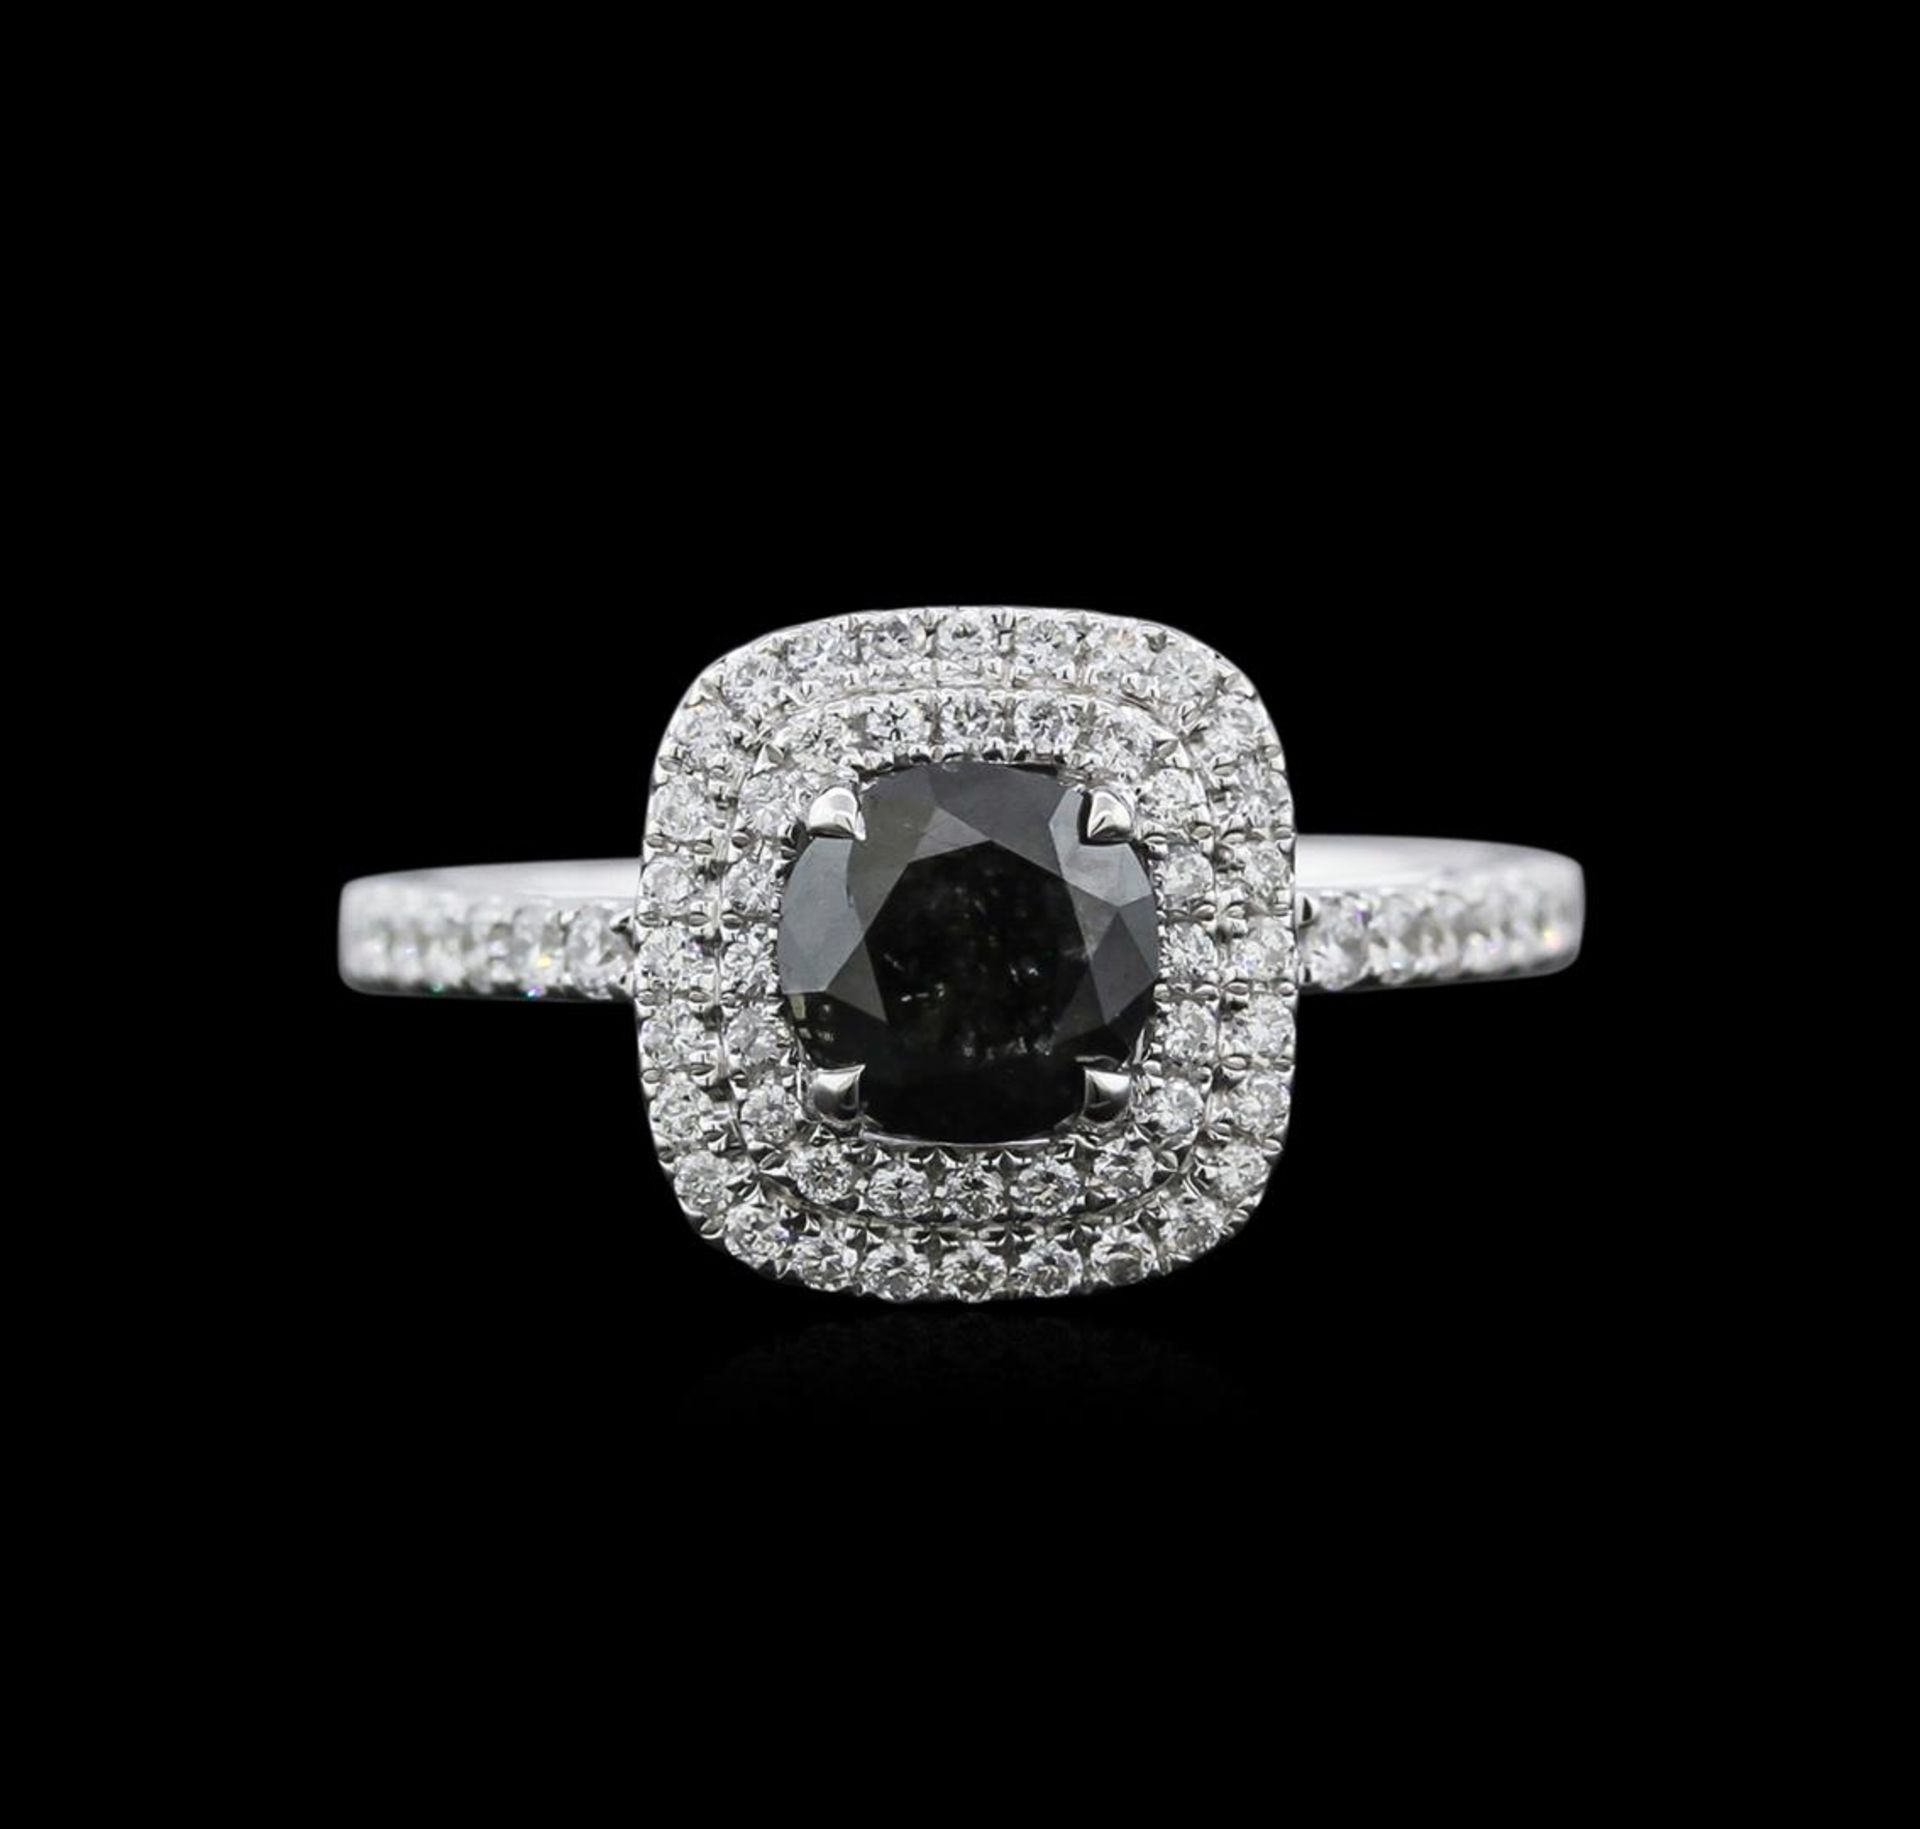 1.23 ctw Black Diamond Ring - 14KT White Gold - Image 2 of 4